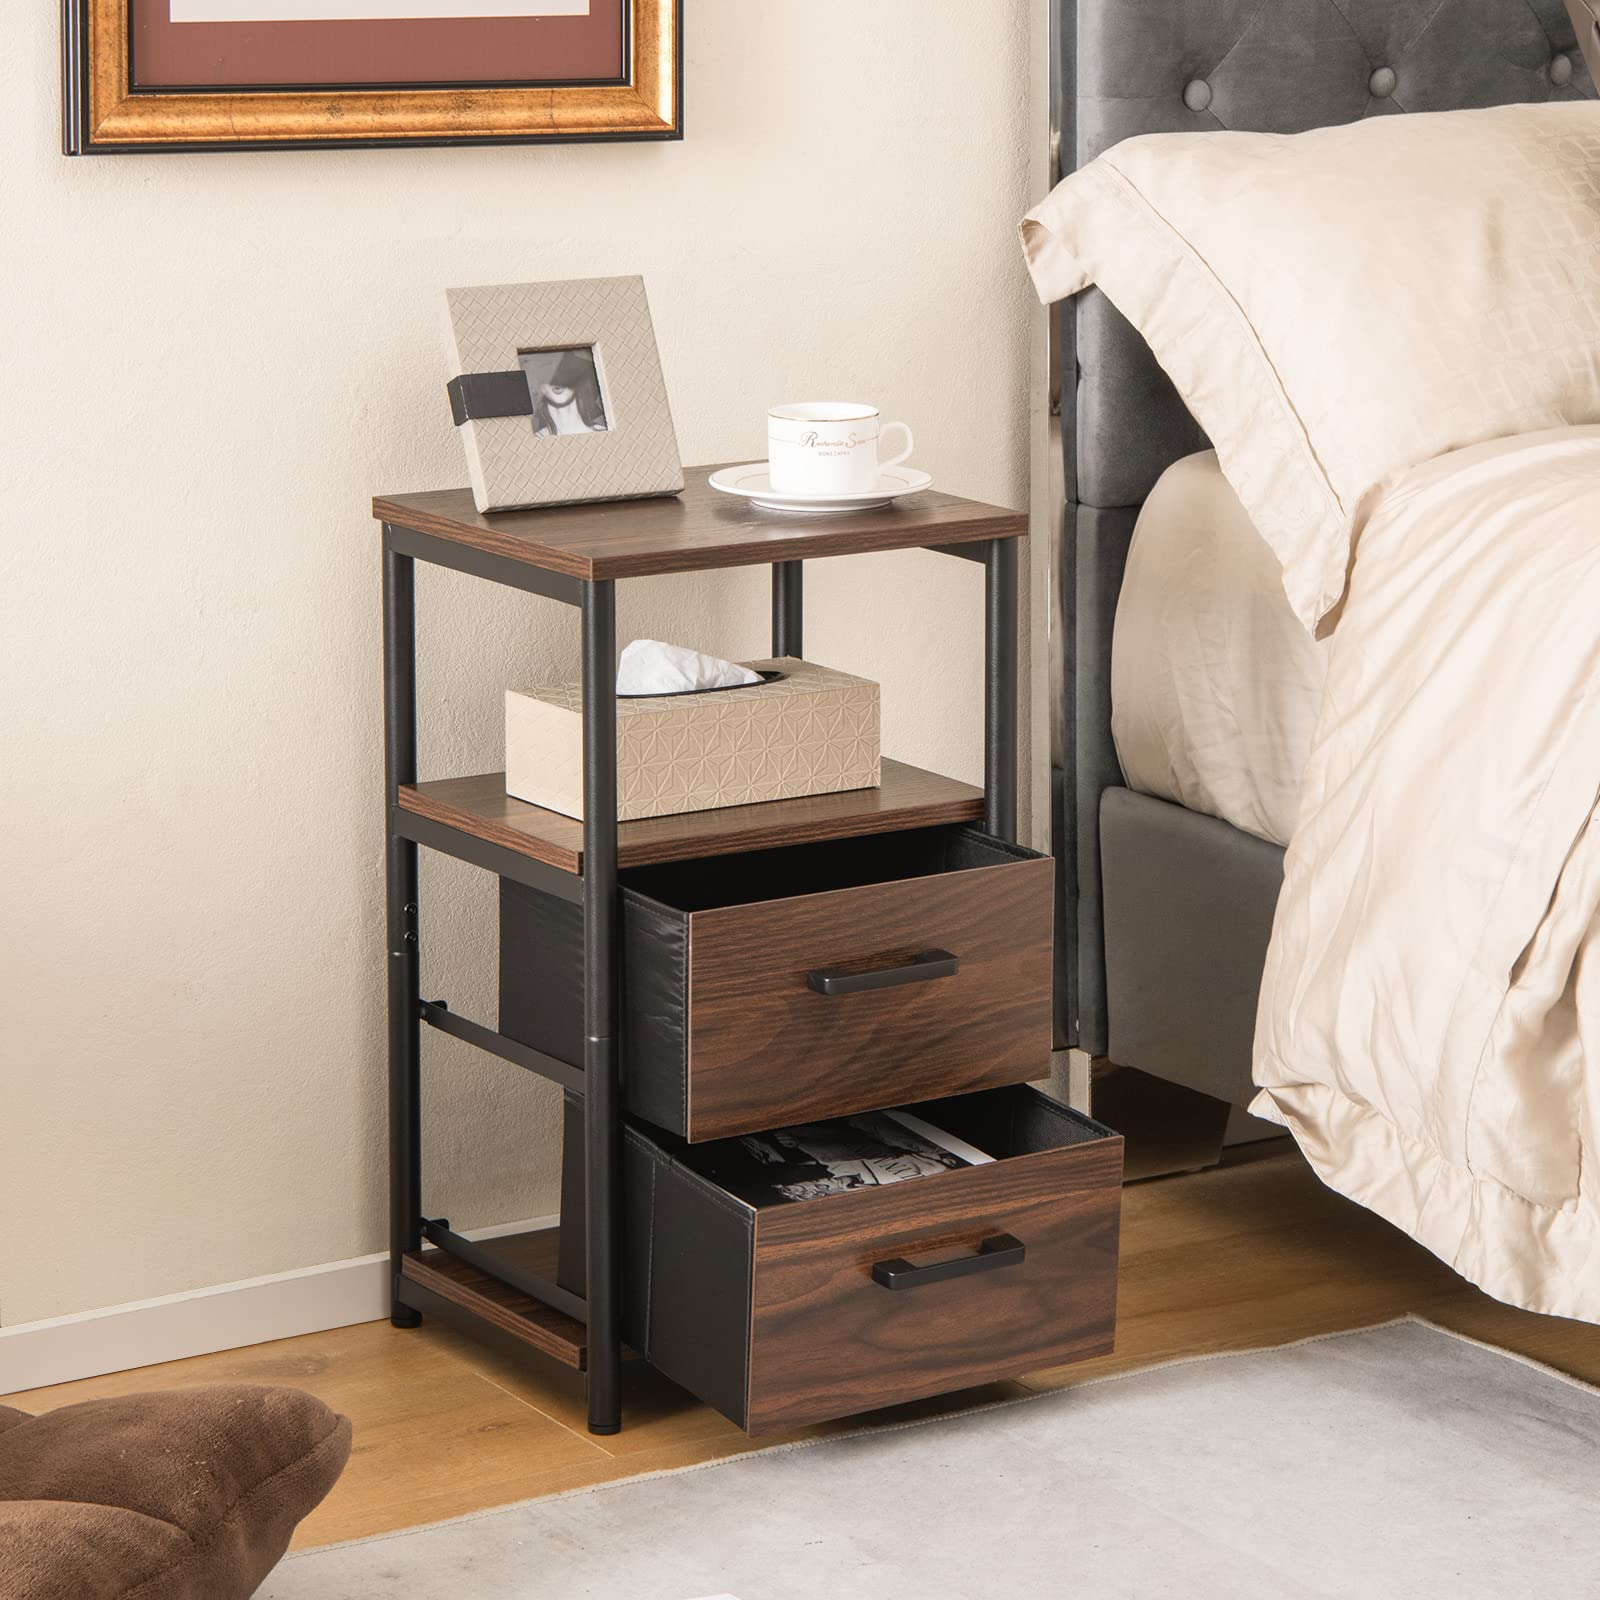 Giantex Nightstand, Bedside Table with 2 Fabric Drawers & Open Wood Shelf Storage